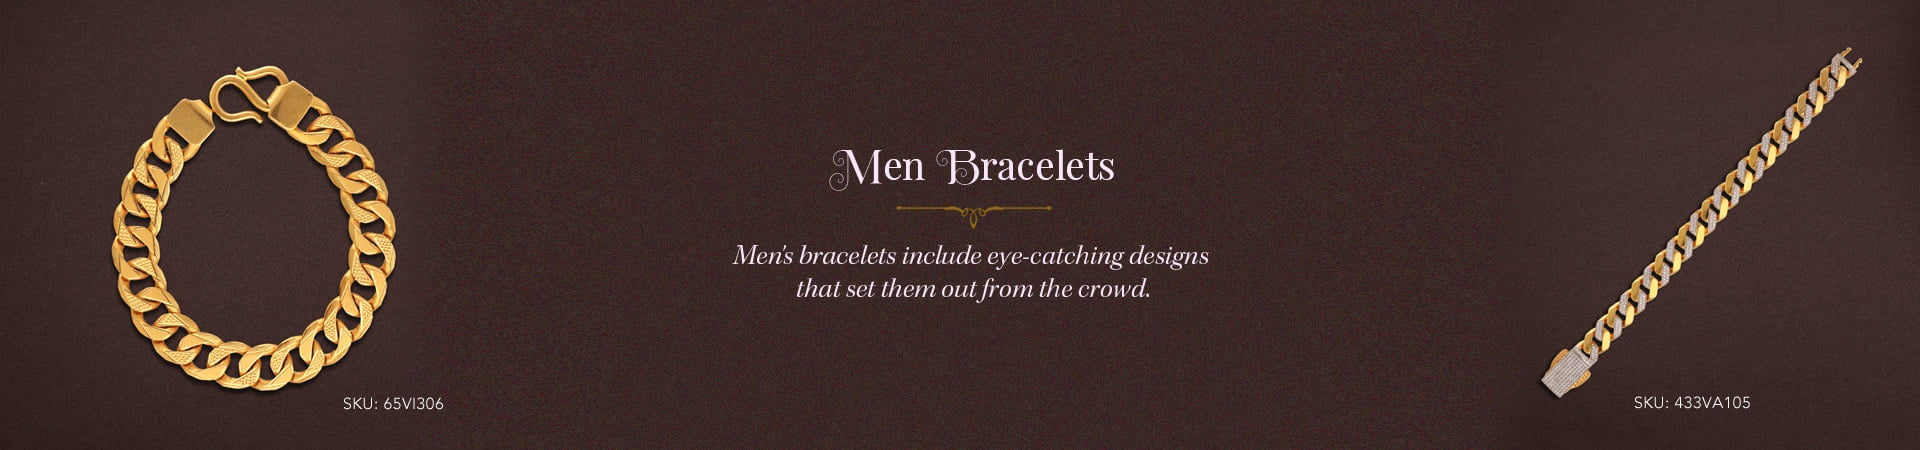 Gold Bracelets for Men